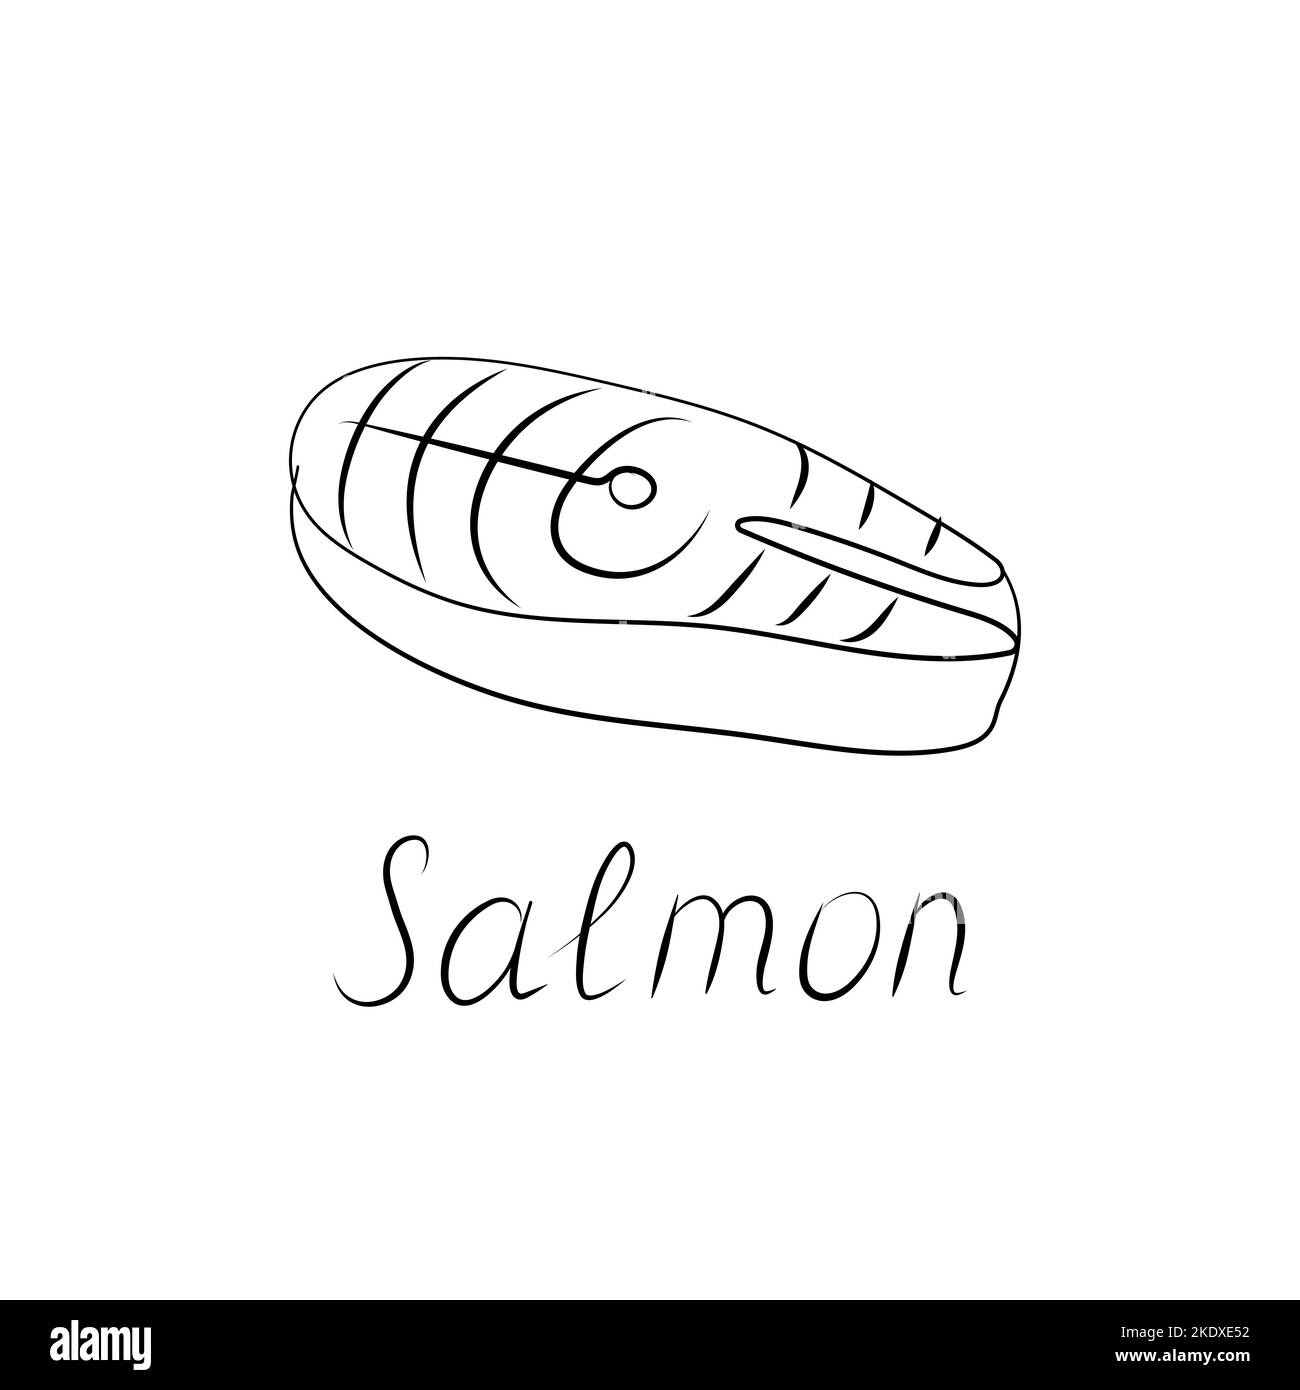 Salmon steak illustration and hand-written inscription. Seafood fish sign. Vector logo Stock Vector